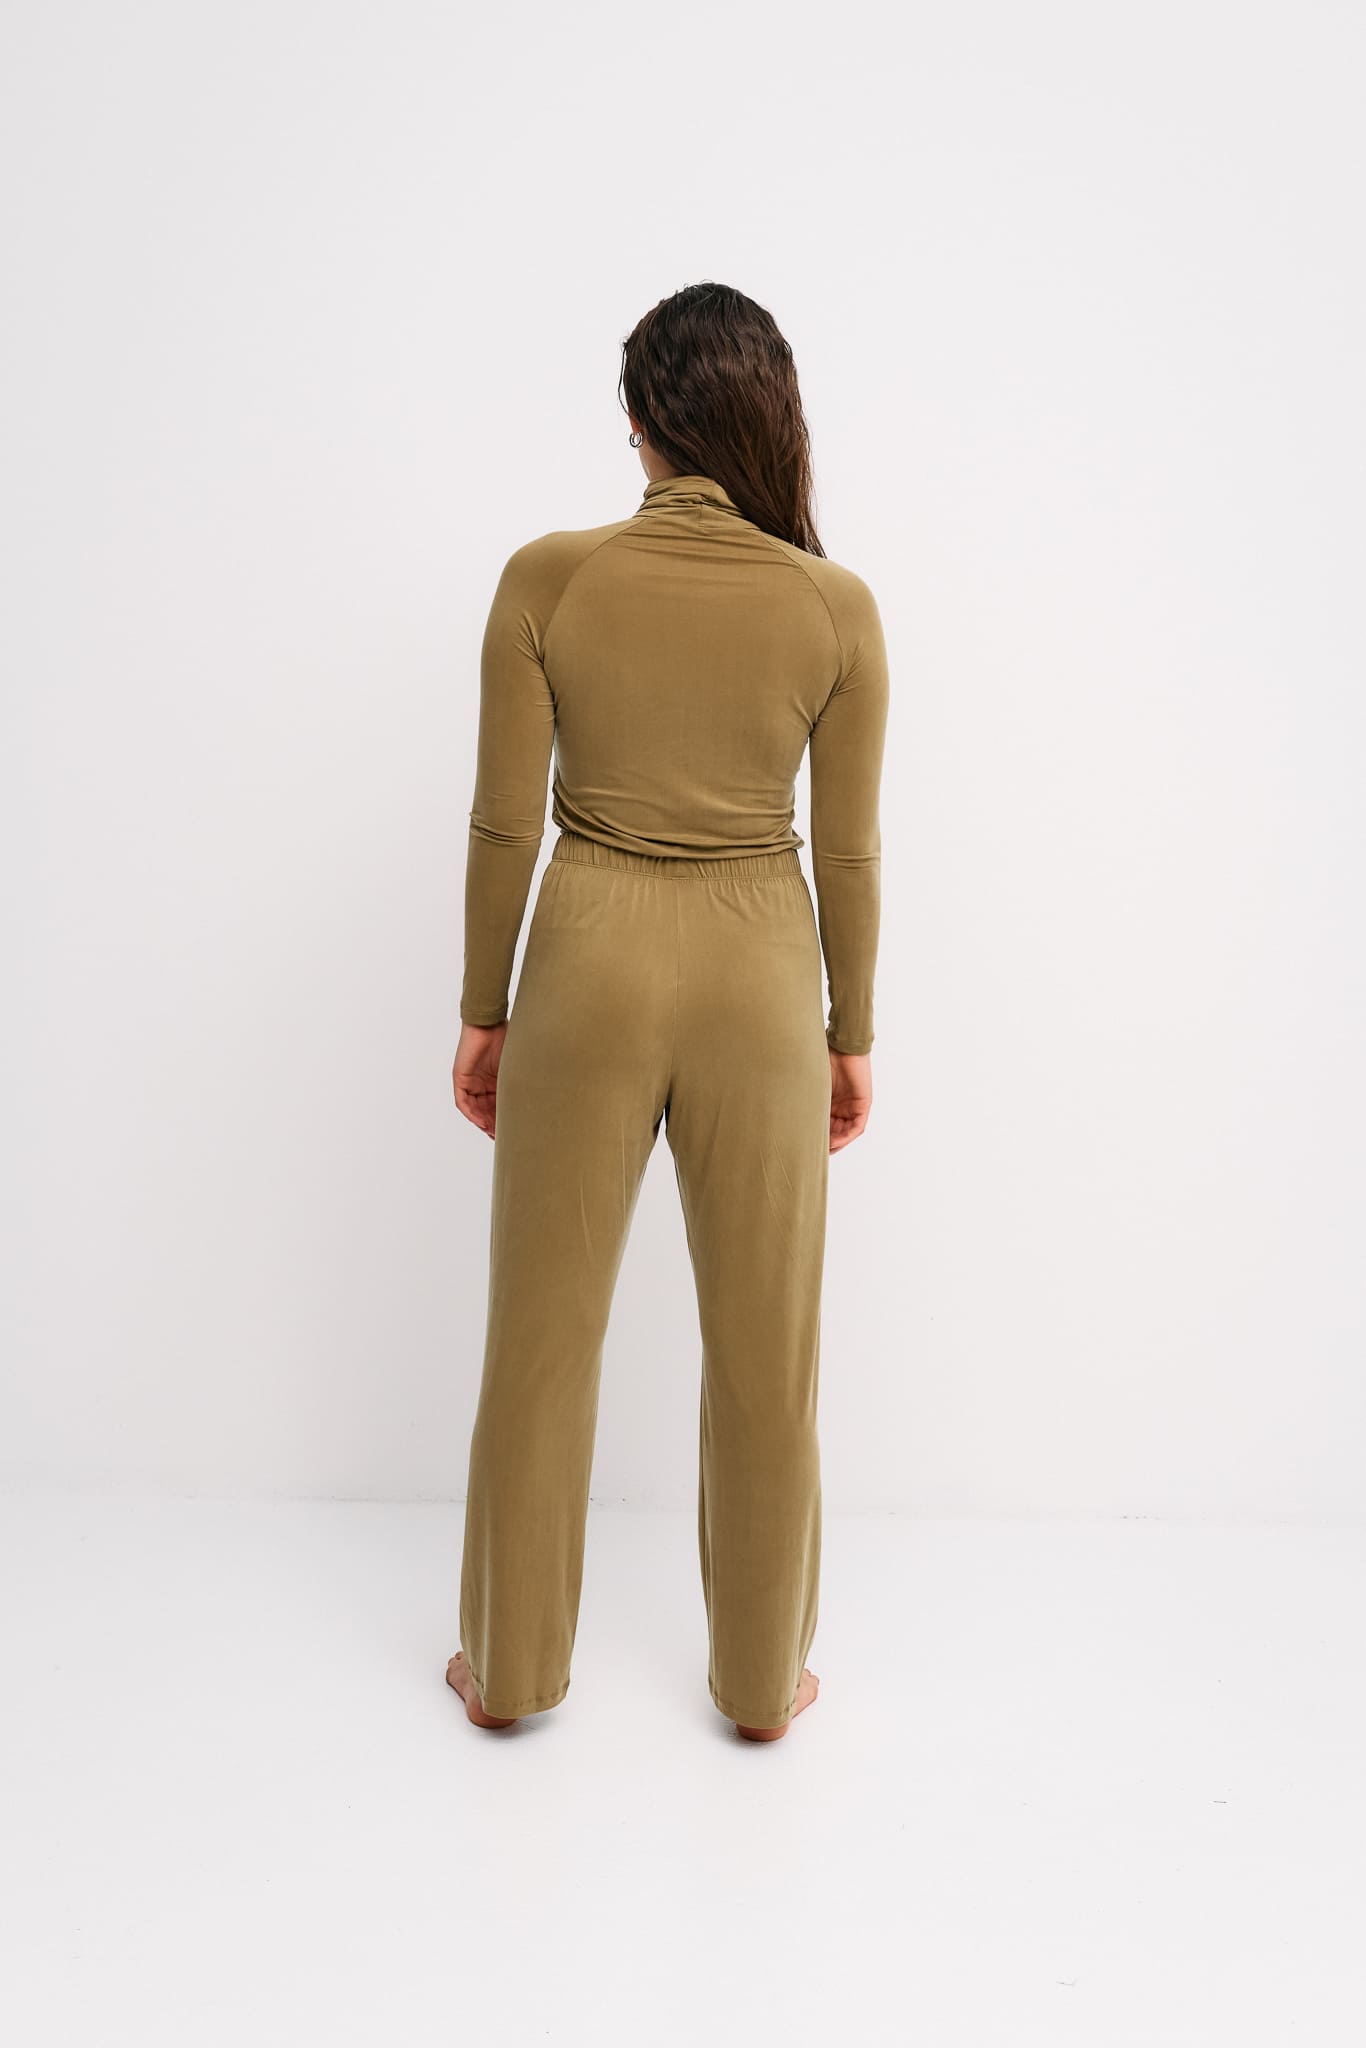 Brown high waist pants made of cupro by MOYA KALA